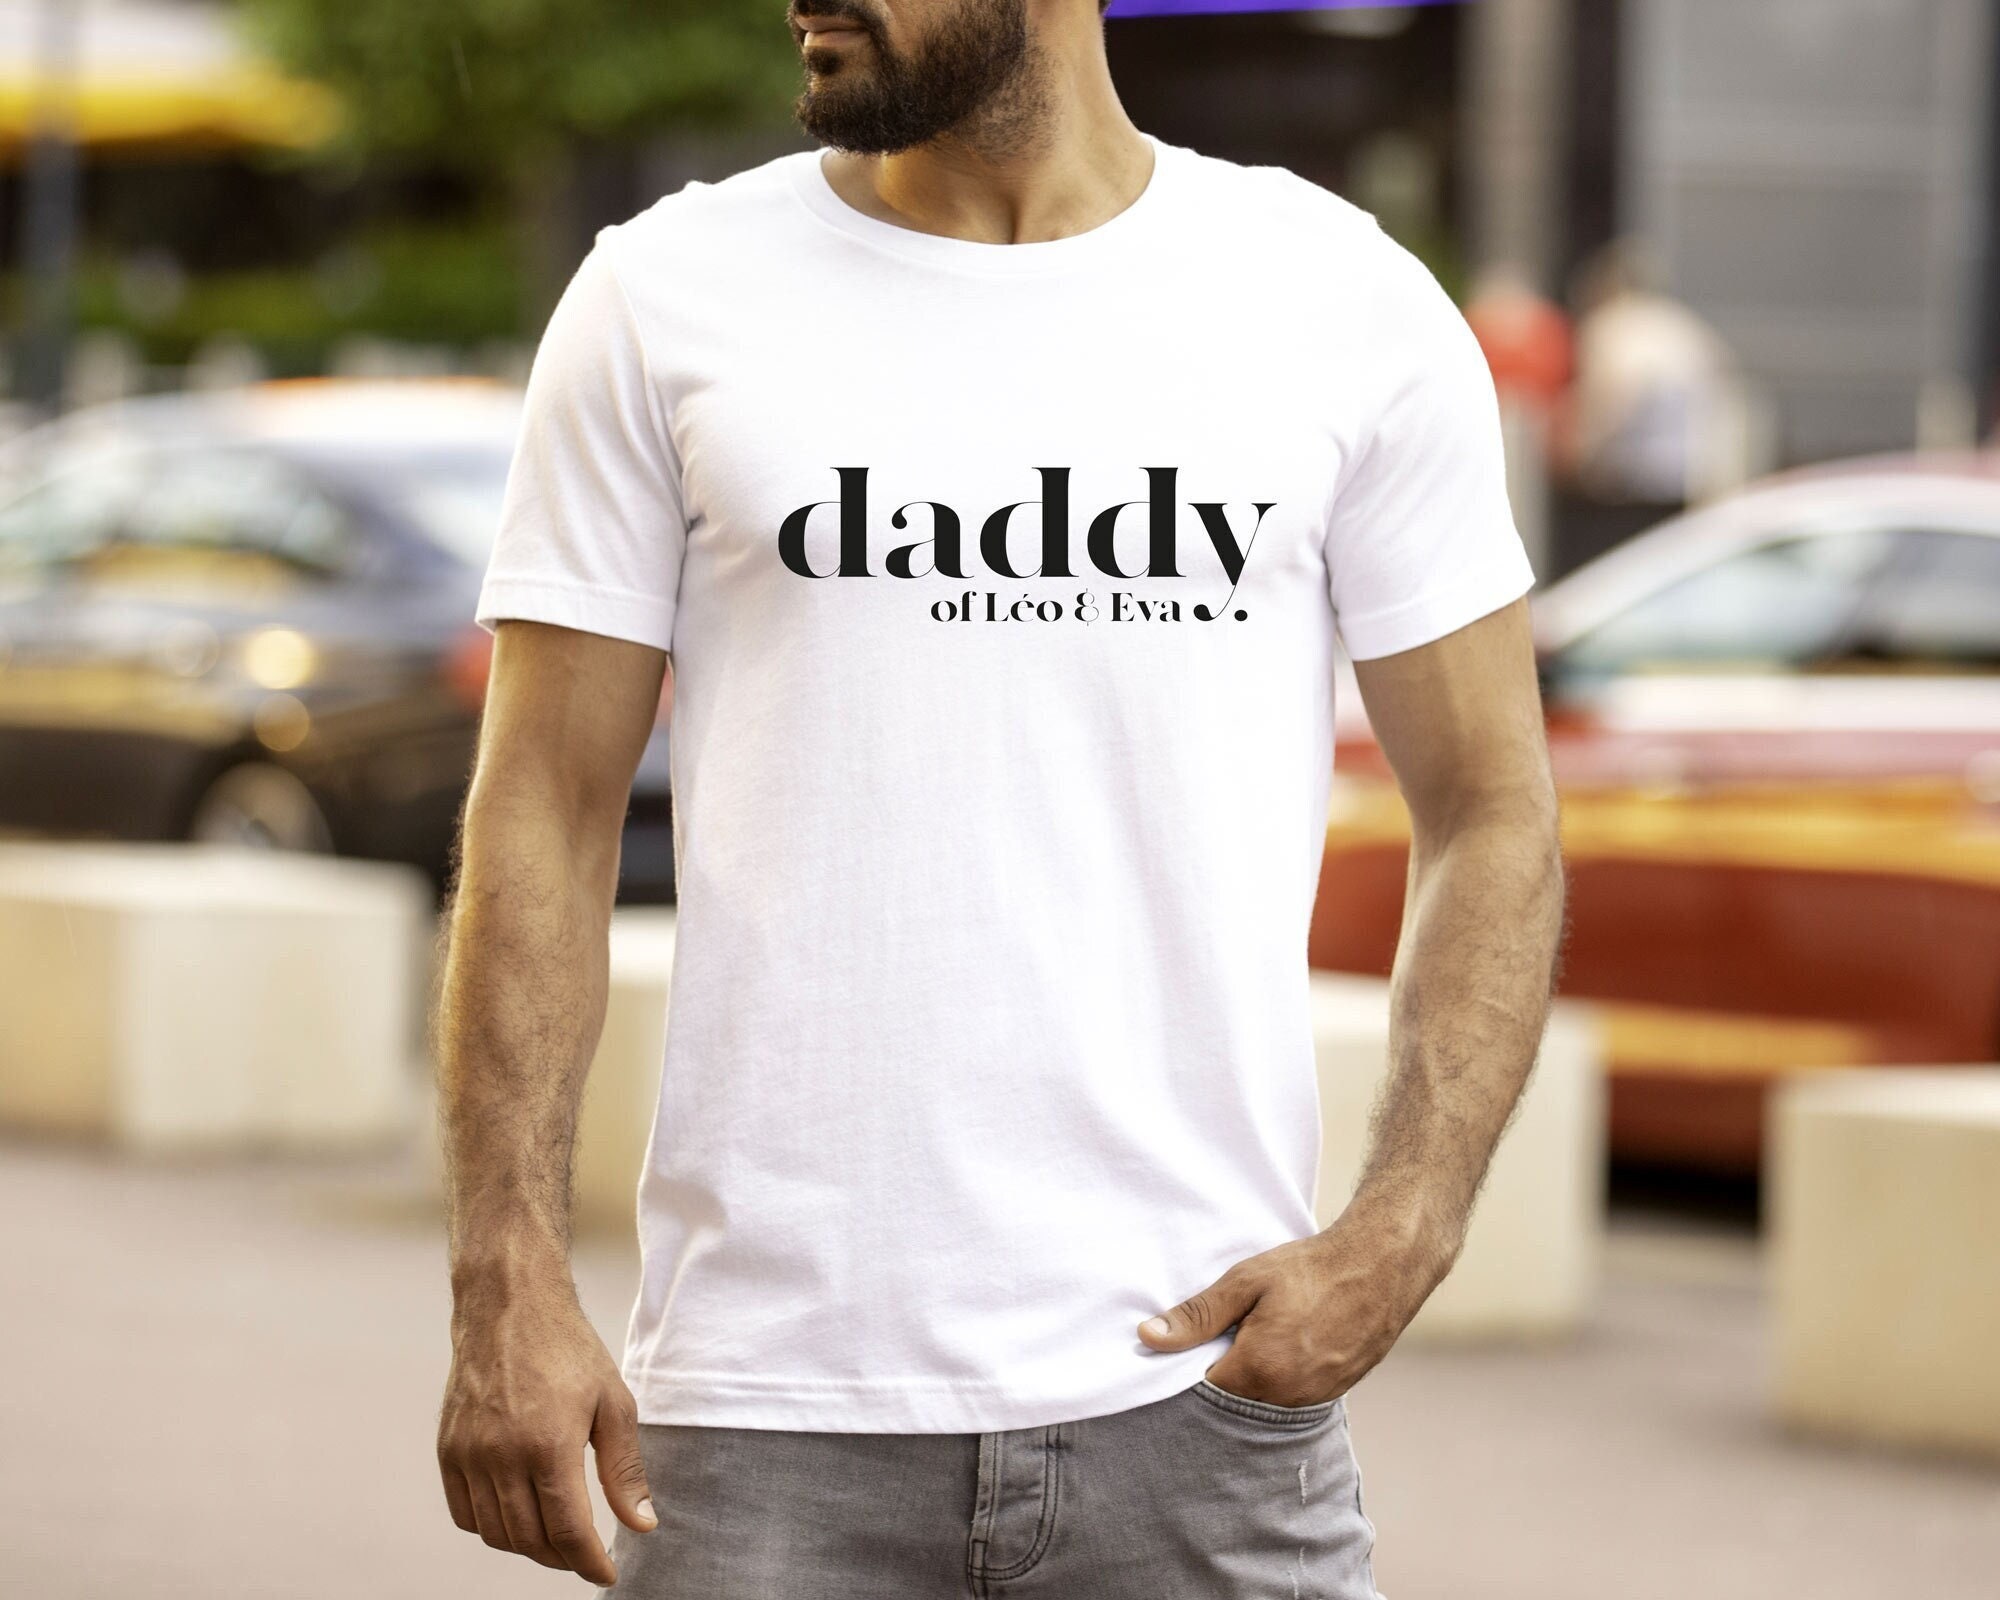 T-shirt homme Daddy of Texte t-shirt personnalisé Tee shirt papa à